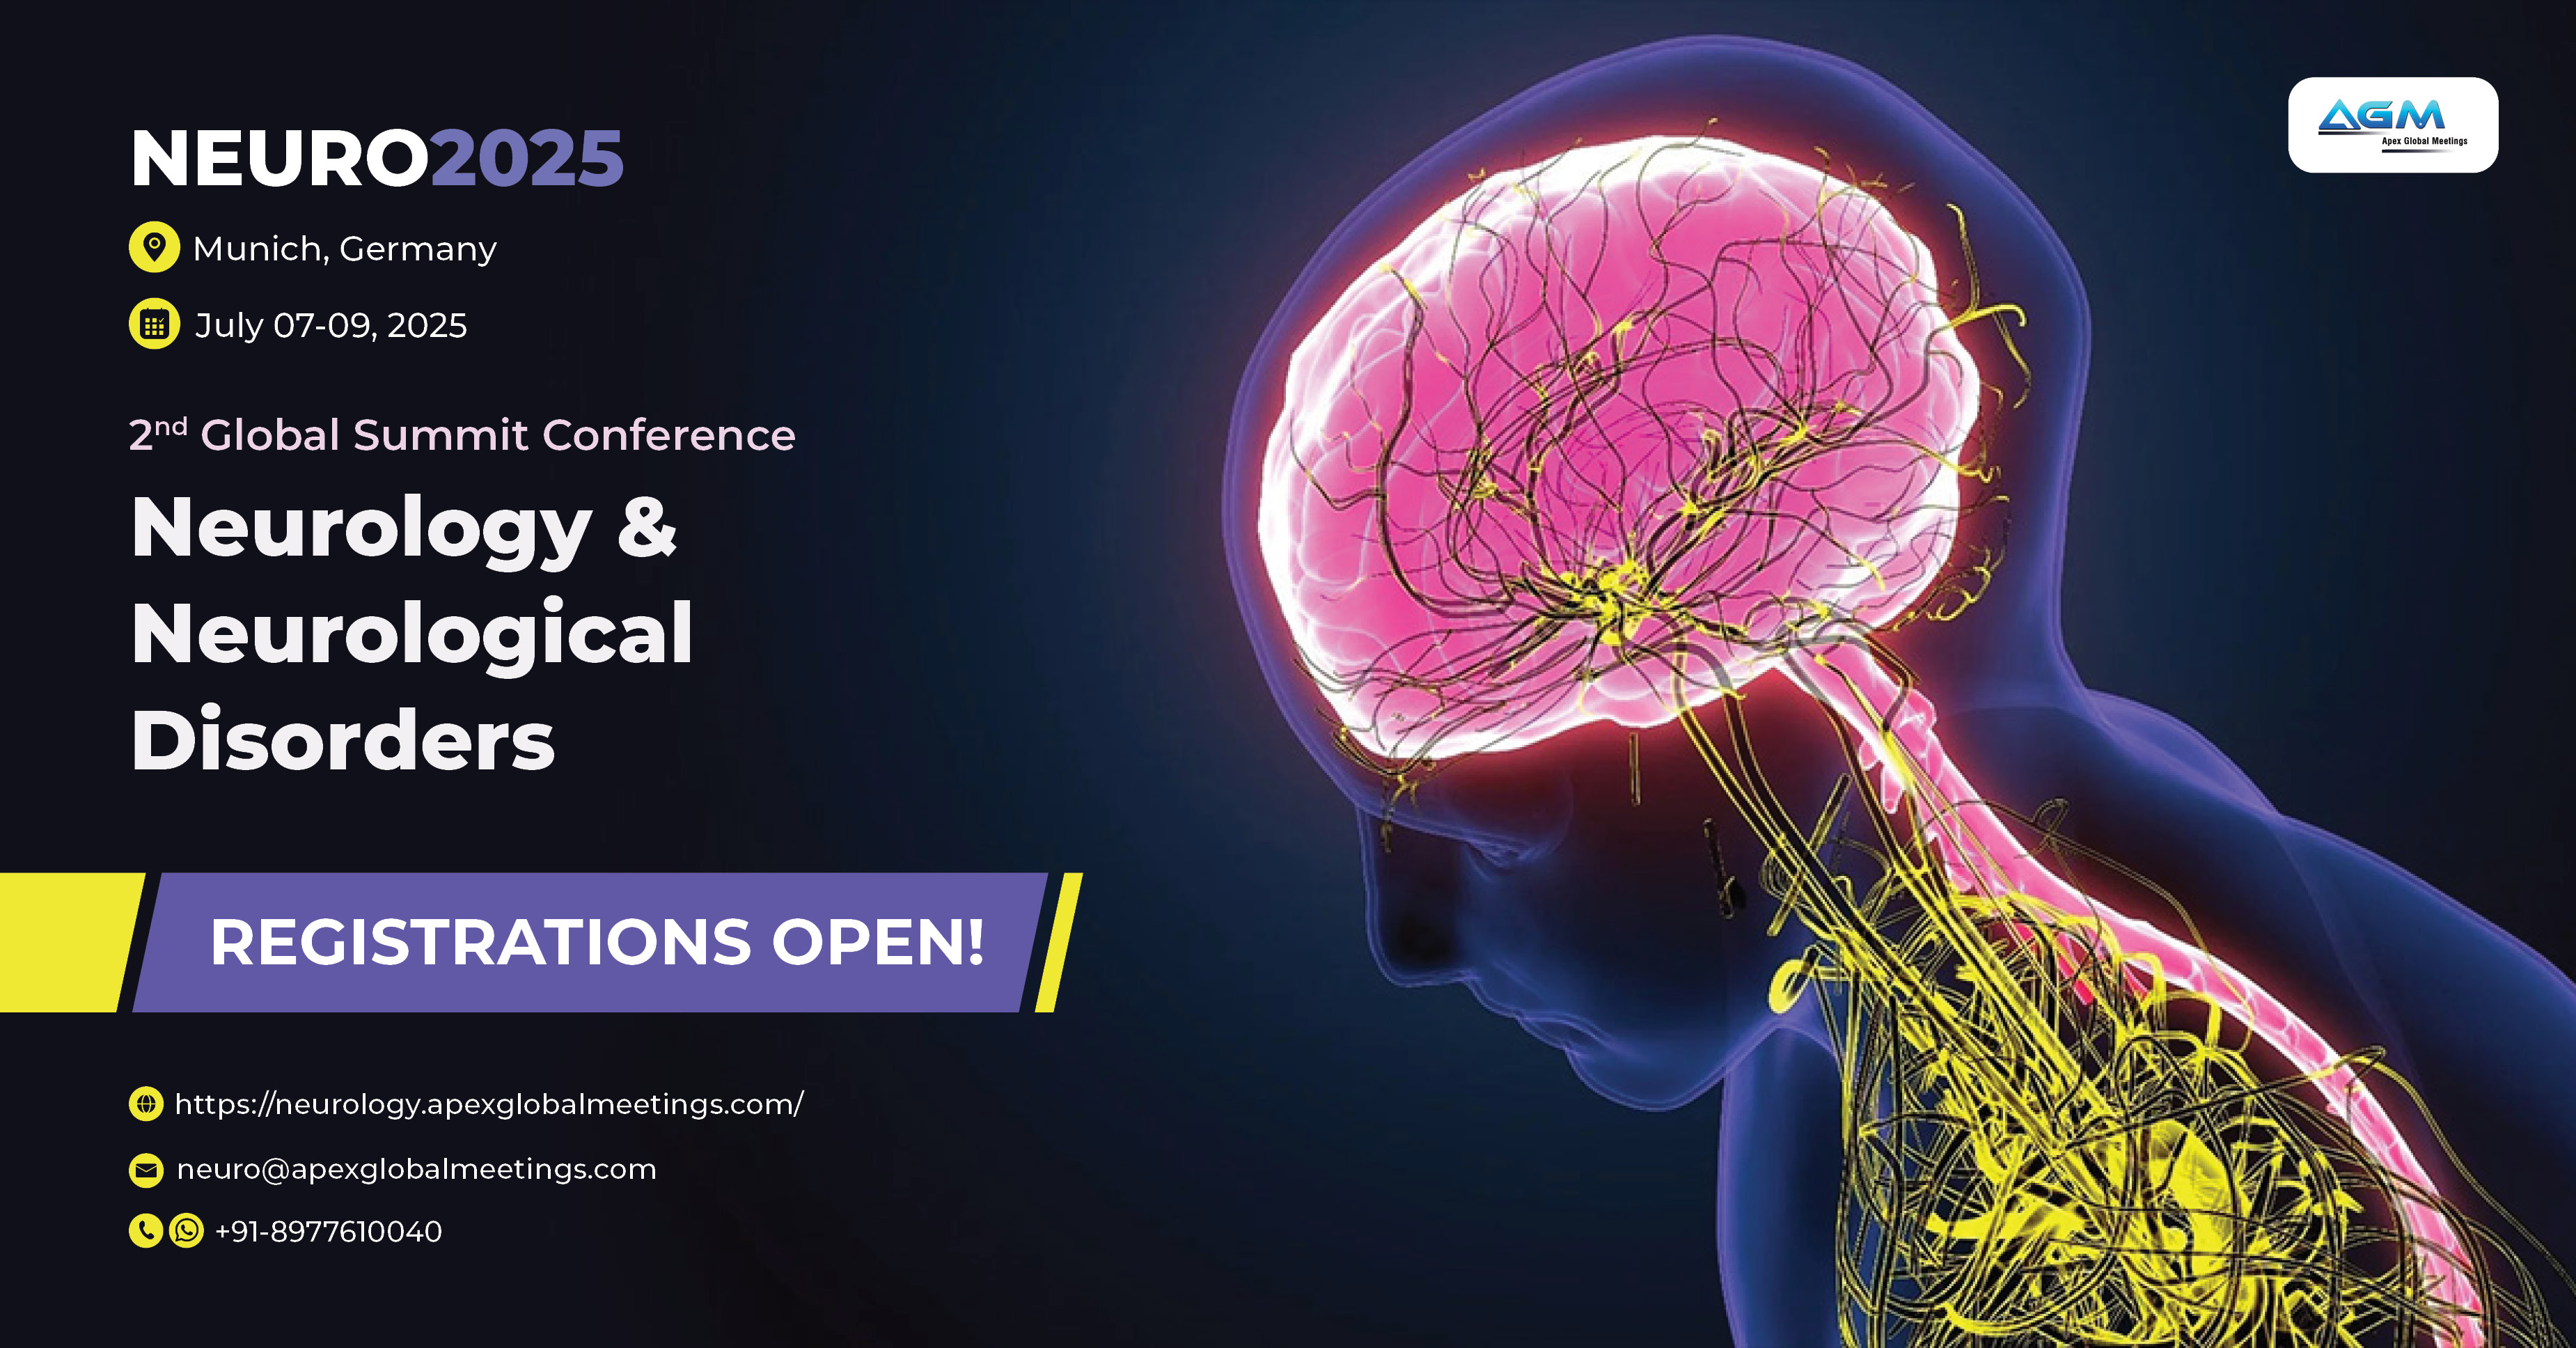 2nd Global Summit Conference Neurology and Neurological Disorders